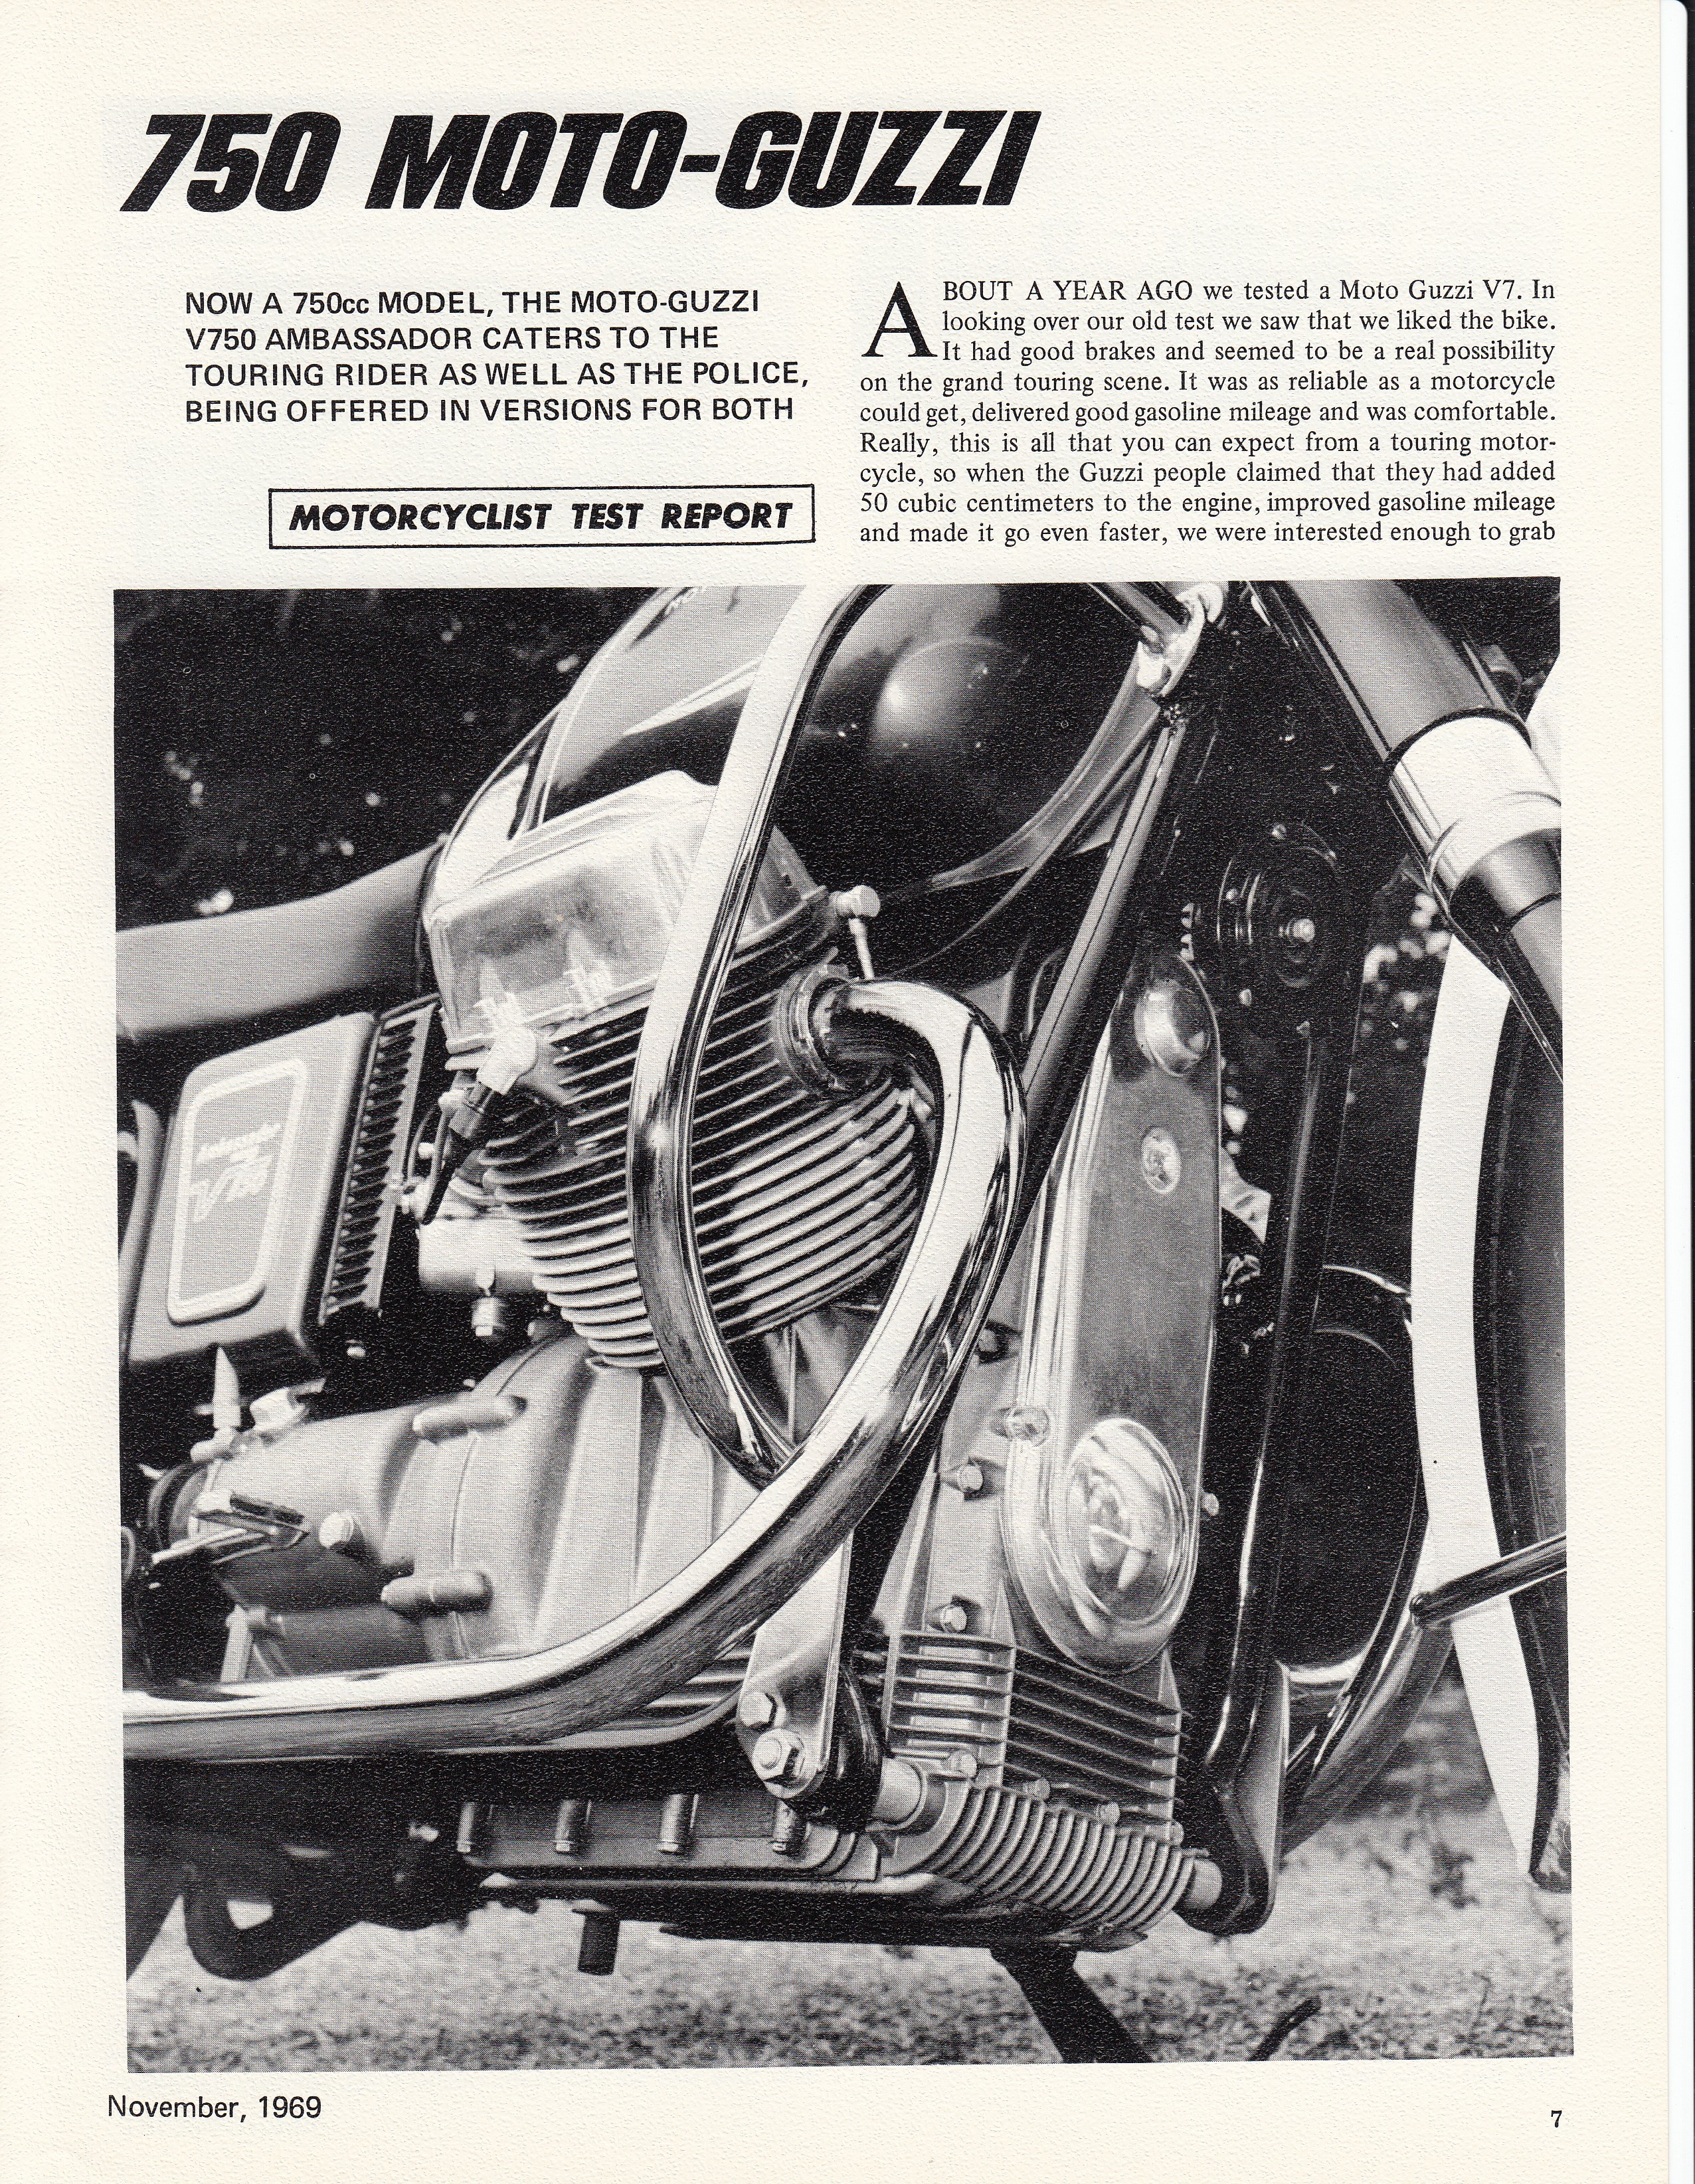 Moto Guzzi Ambassador factory brochure of magazine reviews, Page 7 of 16.